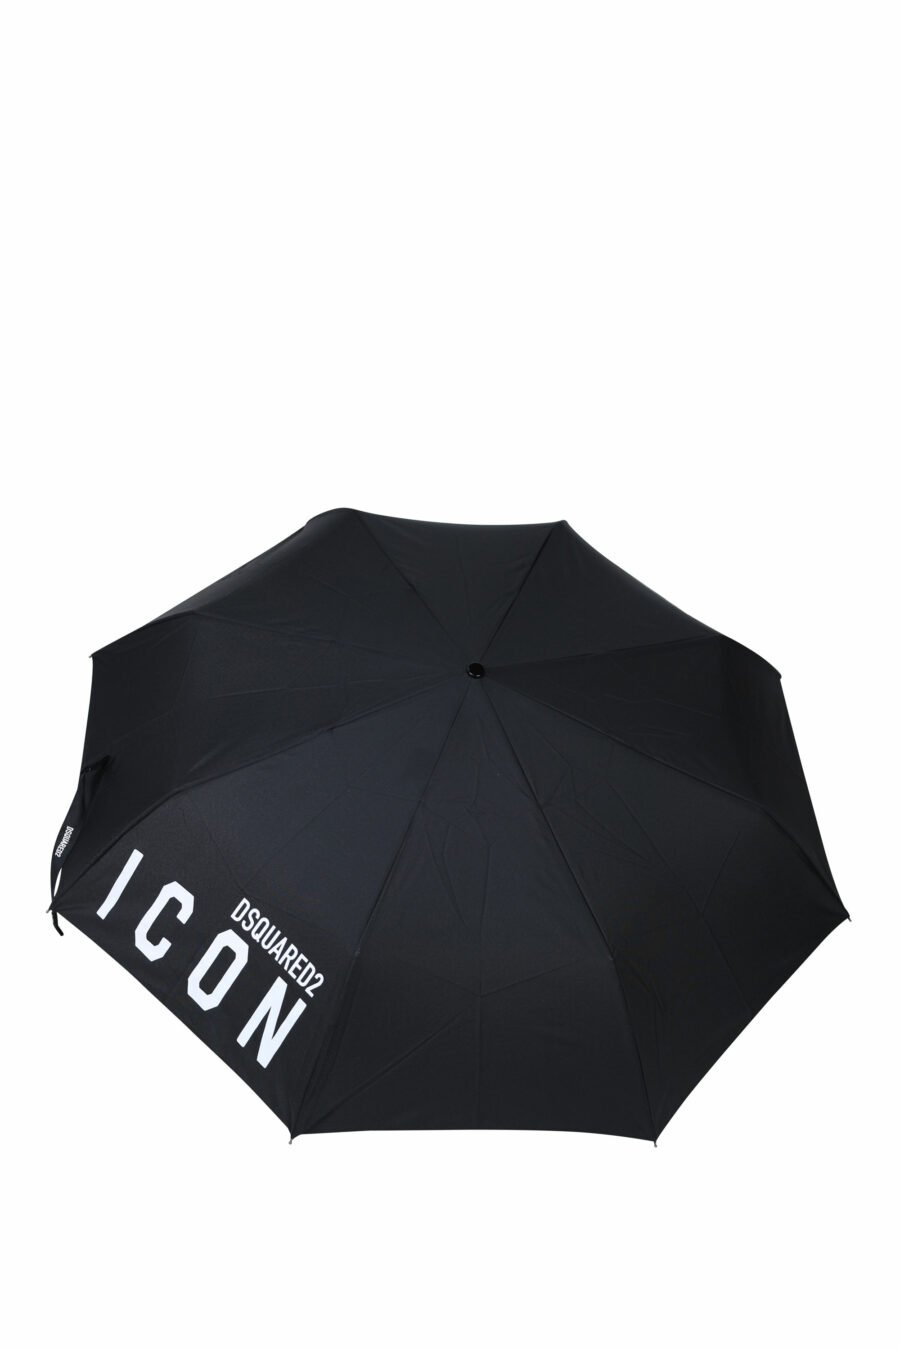 Sombrilla negra con logo "icon" - 8055777215265